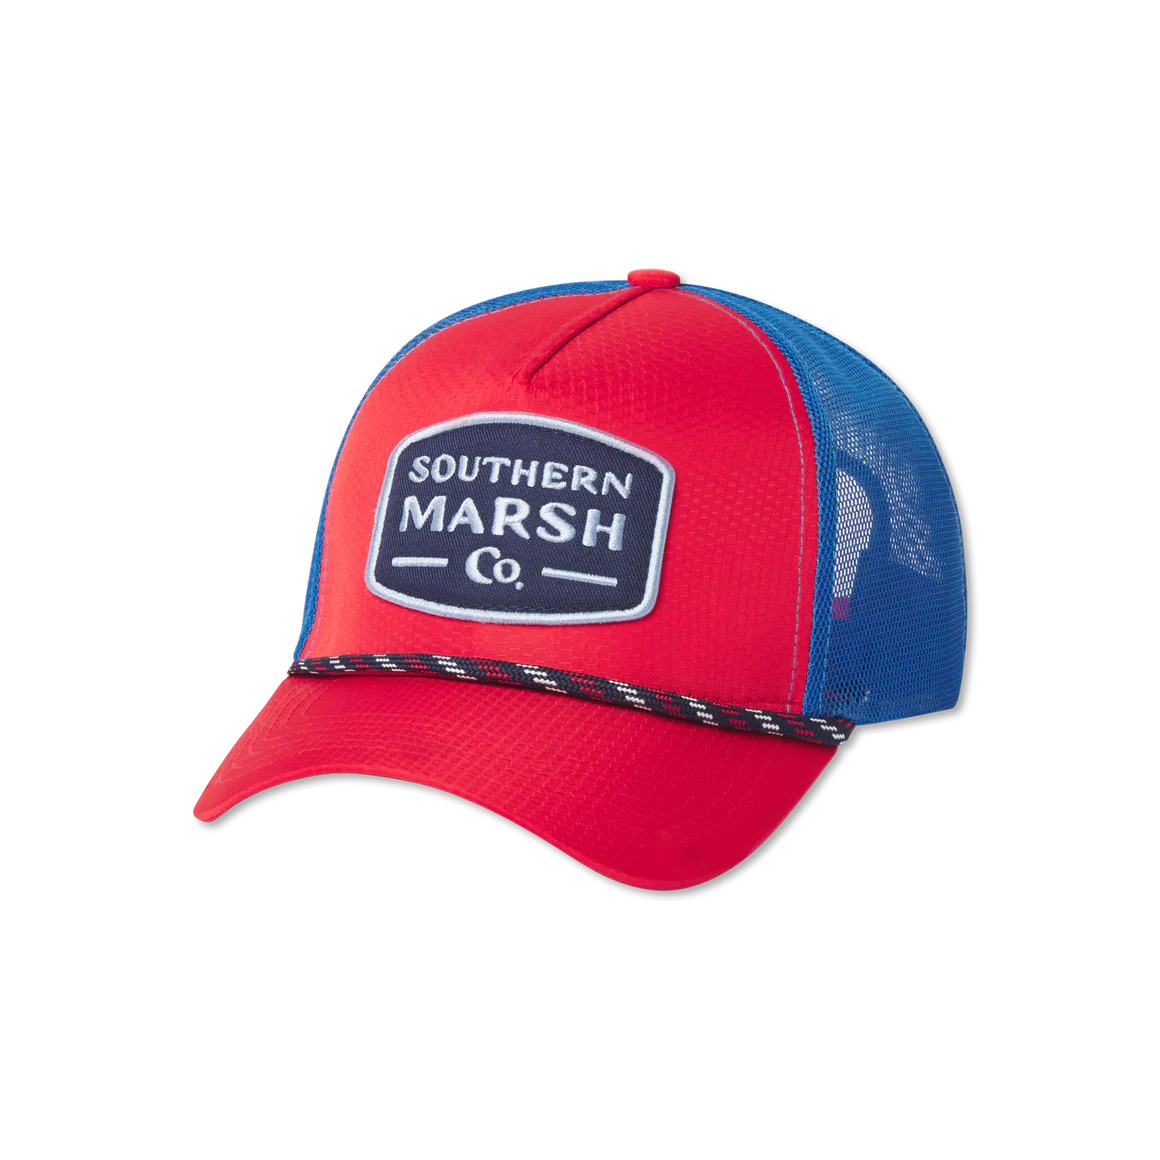 Southern Marsh Ensenada Rope Hat - Vintage Co. - Red